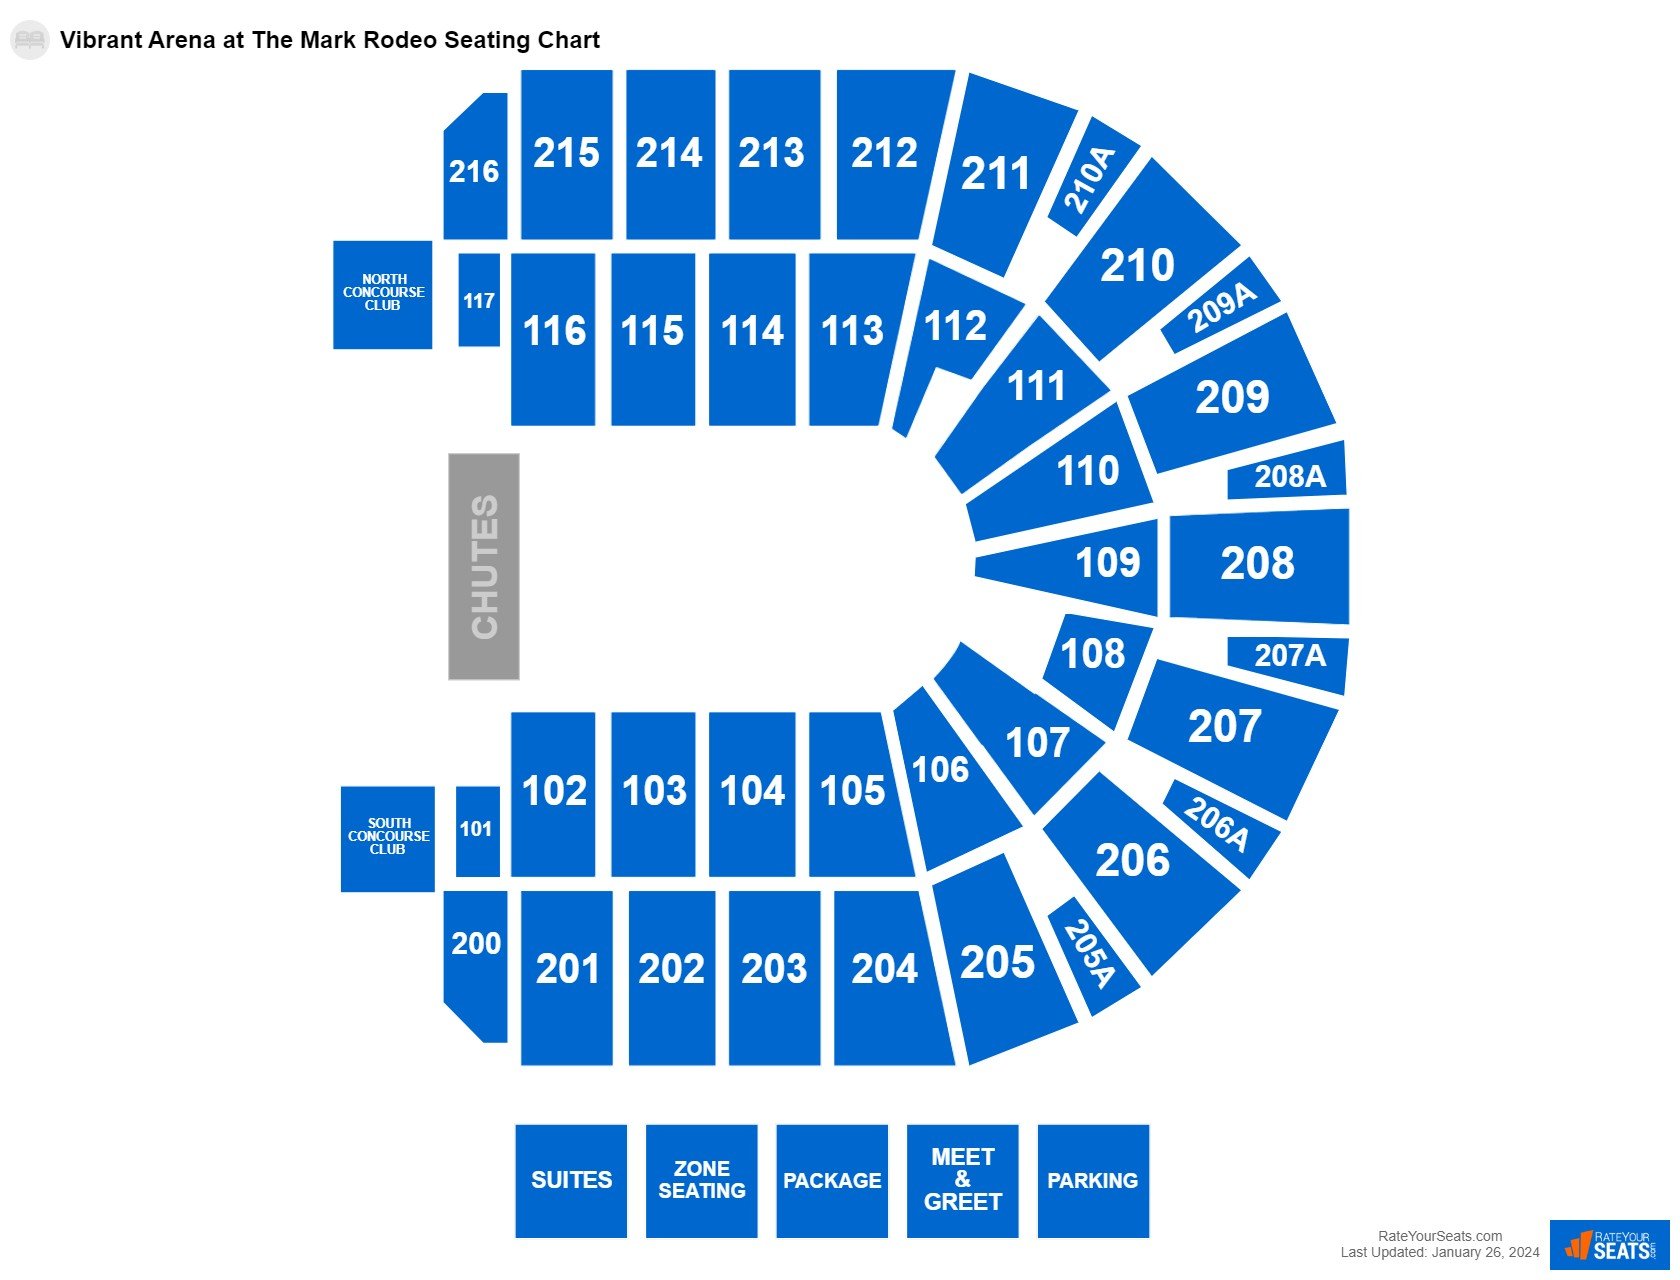 Rodeo seating chart at Vibrant Arena at The Mark